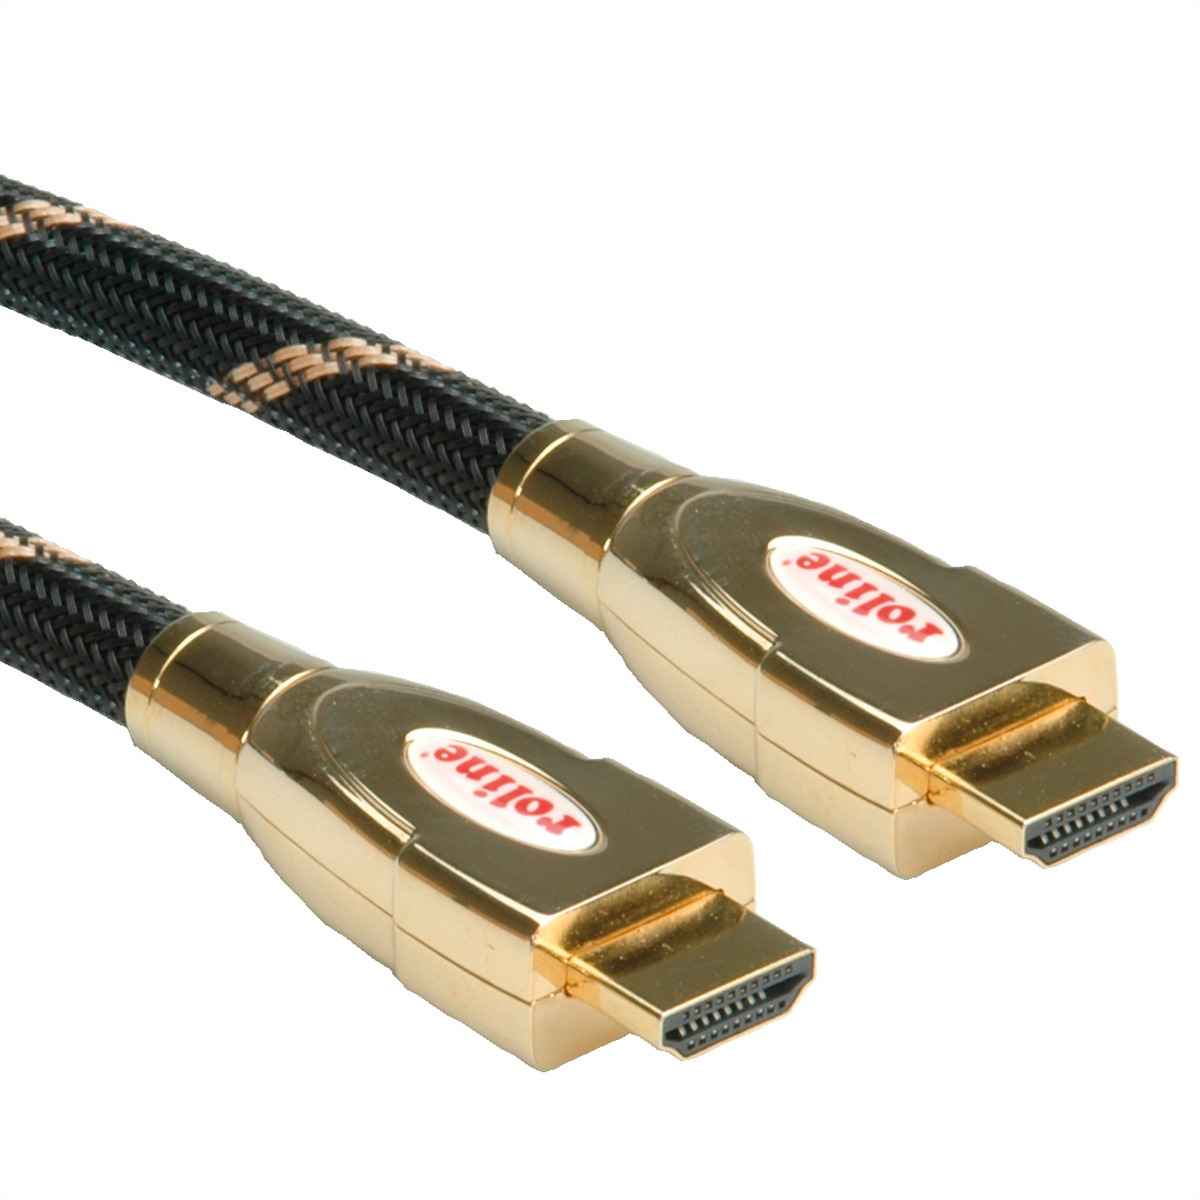 ROLINE GOLD Ethernet mit HD Ultra HD HDMI mit Ultra Ethernet, HDMI ST/ST Kabel Kabel